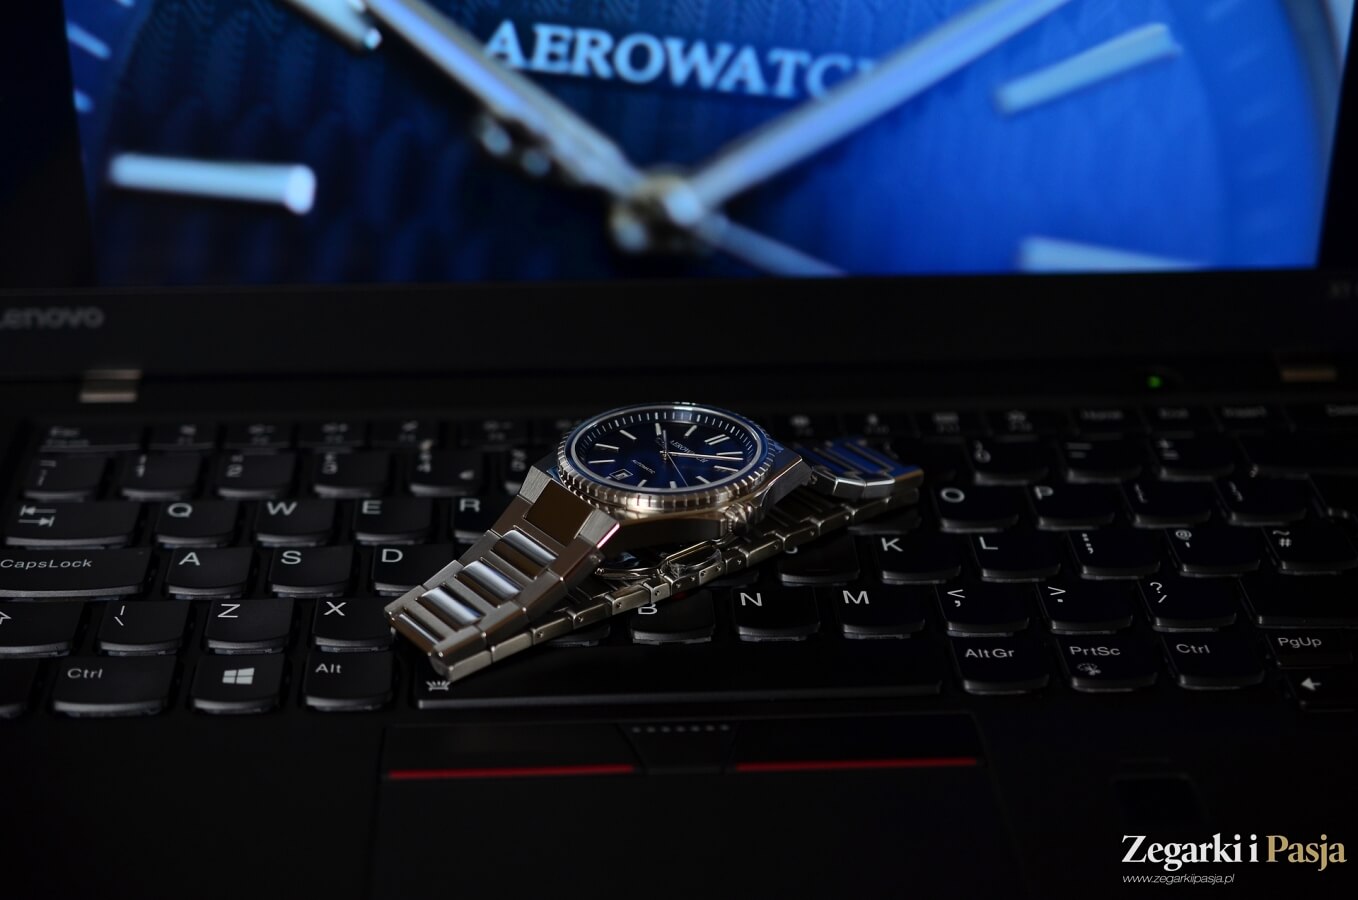 Recenzja: Aerowatch Milan Automatic